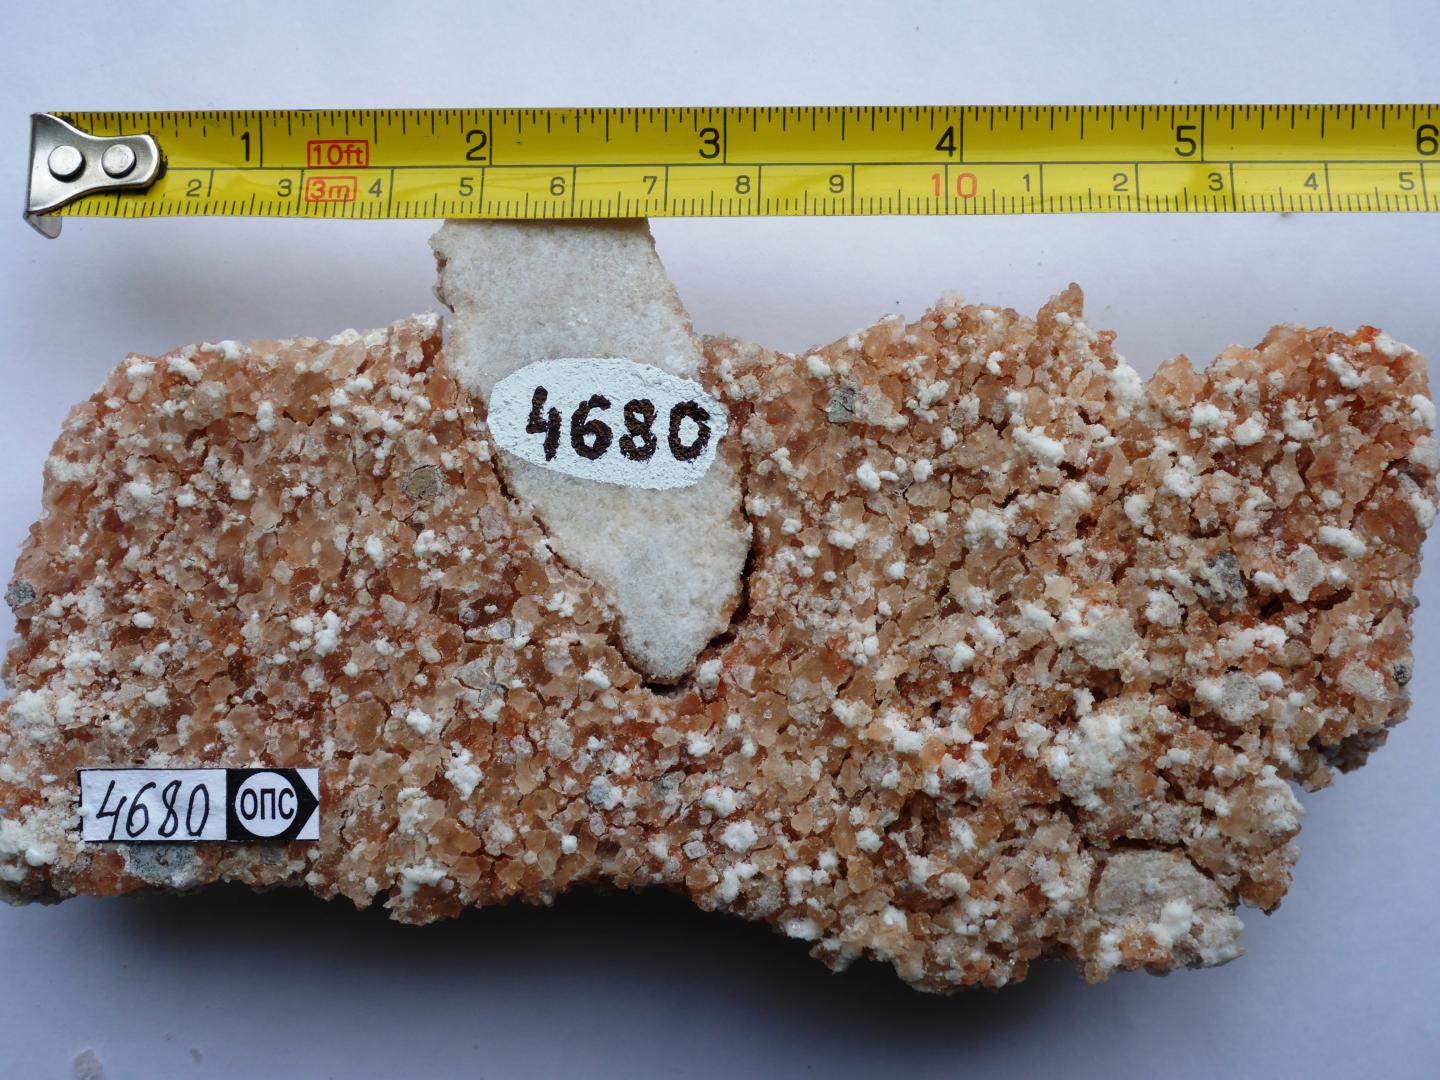 Rock Salt Tells Story of Ancient Earth